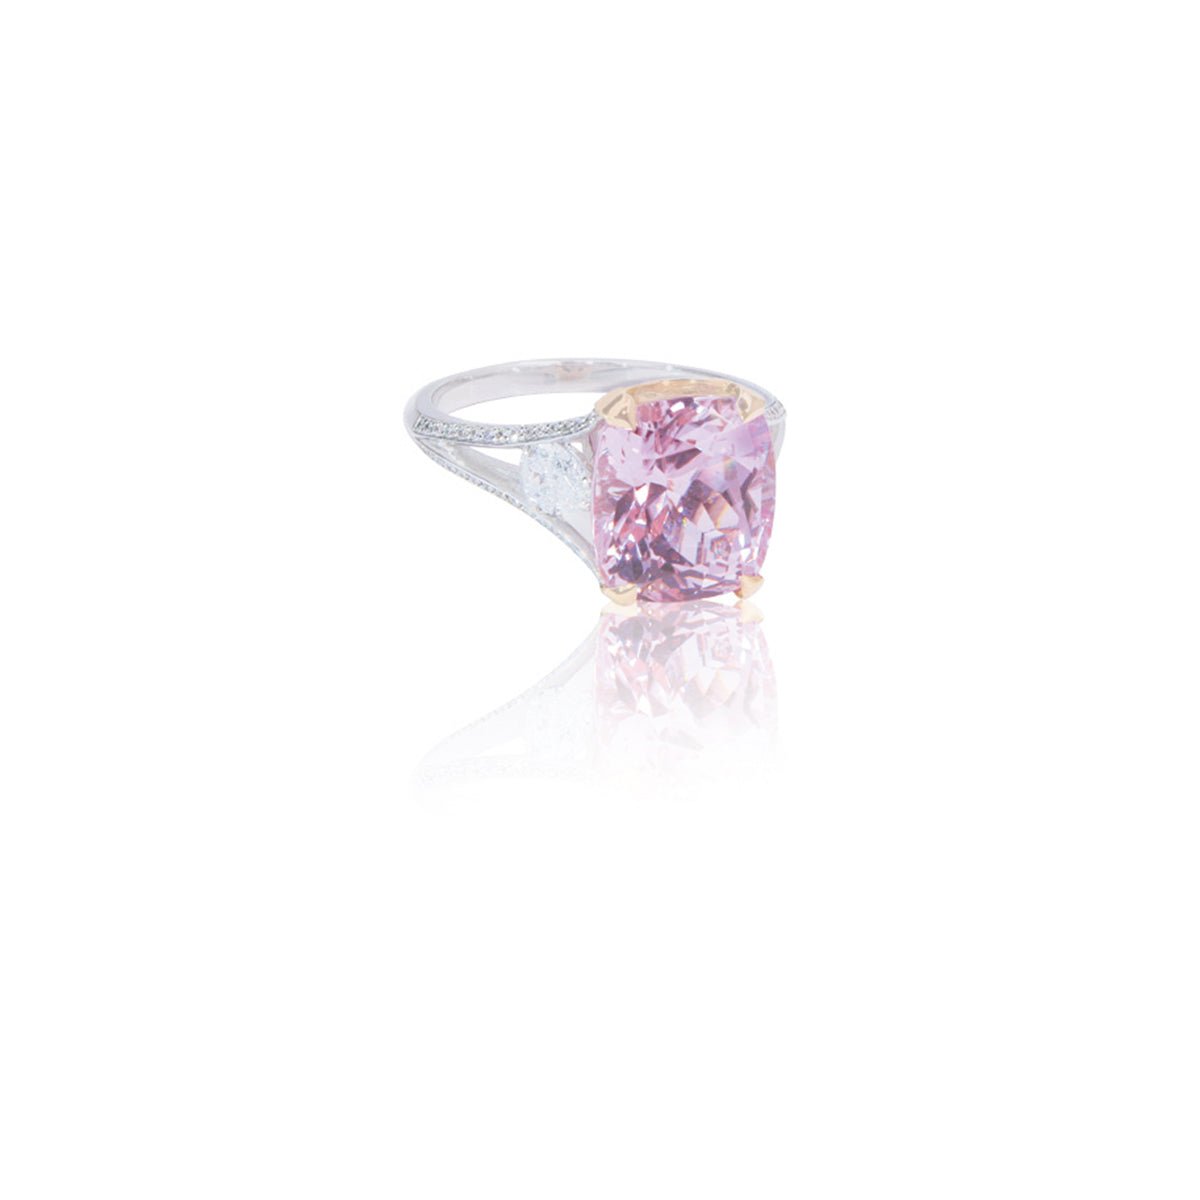 "Blooming senses" natural kunzite ring - Surround Art & Diamonds Jewelry by Surround Art & Diamonds